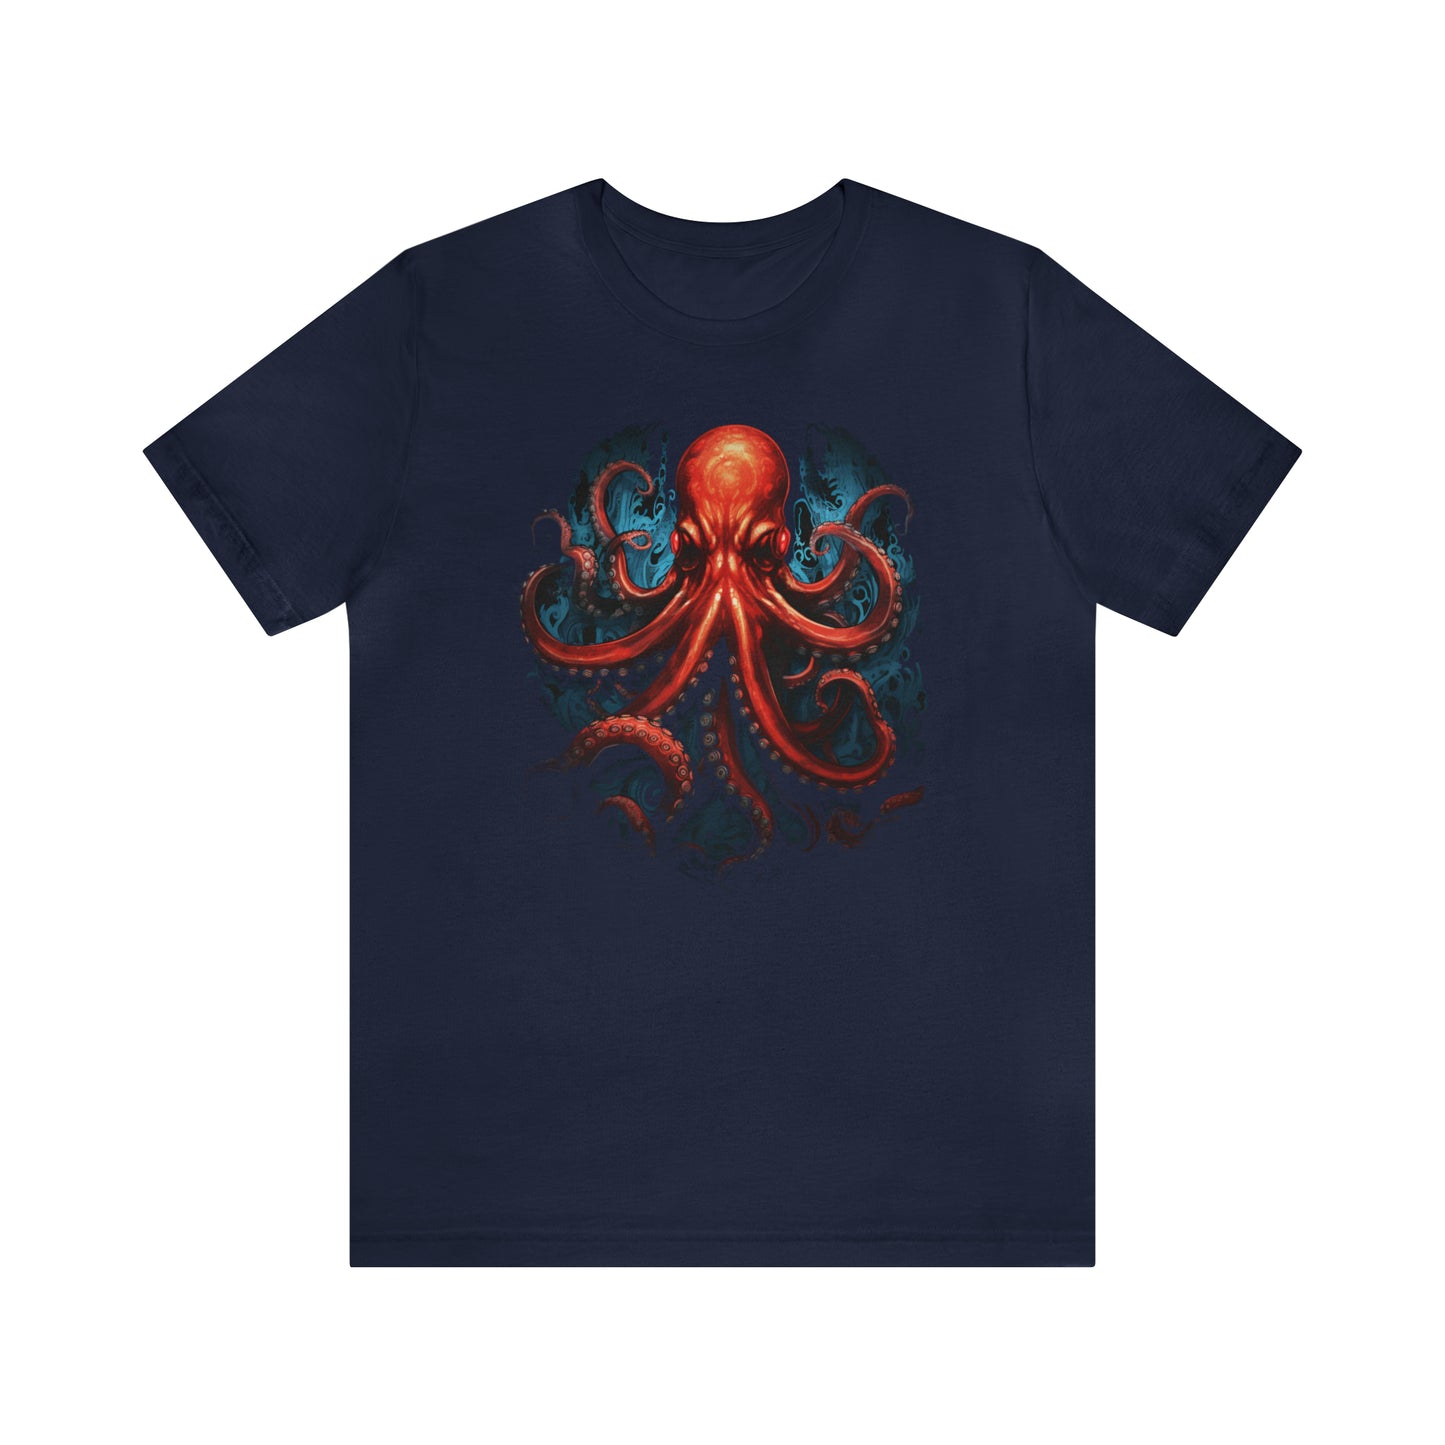 Octopus Tshirt, Kraken Men Women Adult Aesthetic Graphic Crewneck Short Sleeve Tee Shirt Top Starcove Fashion